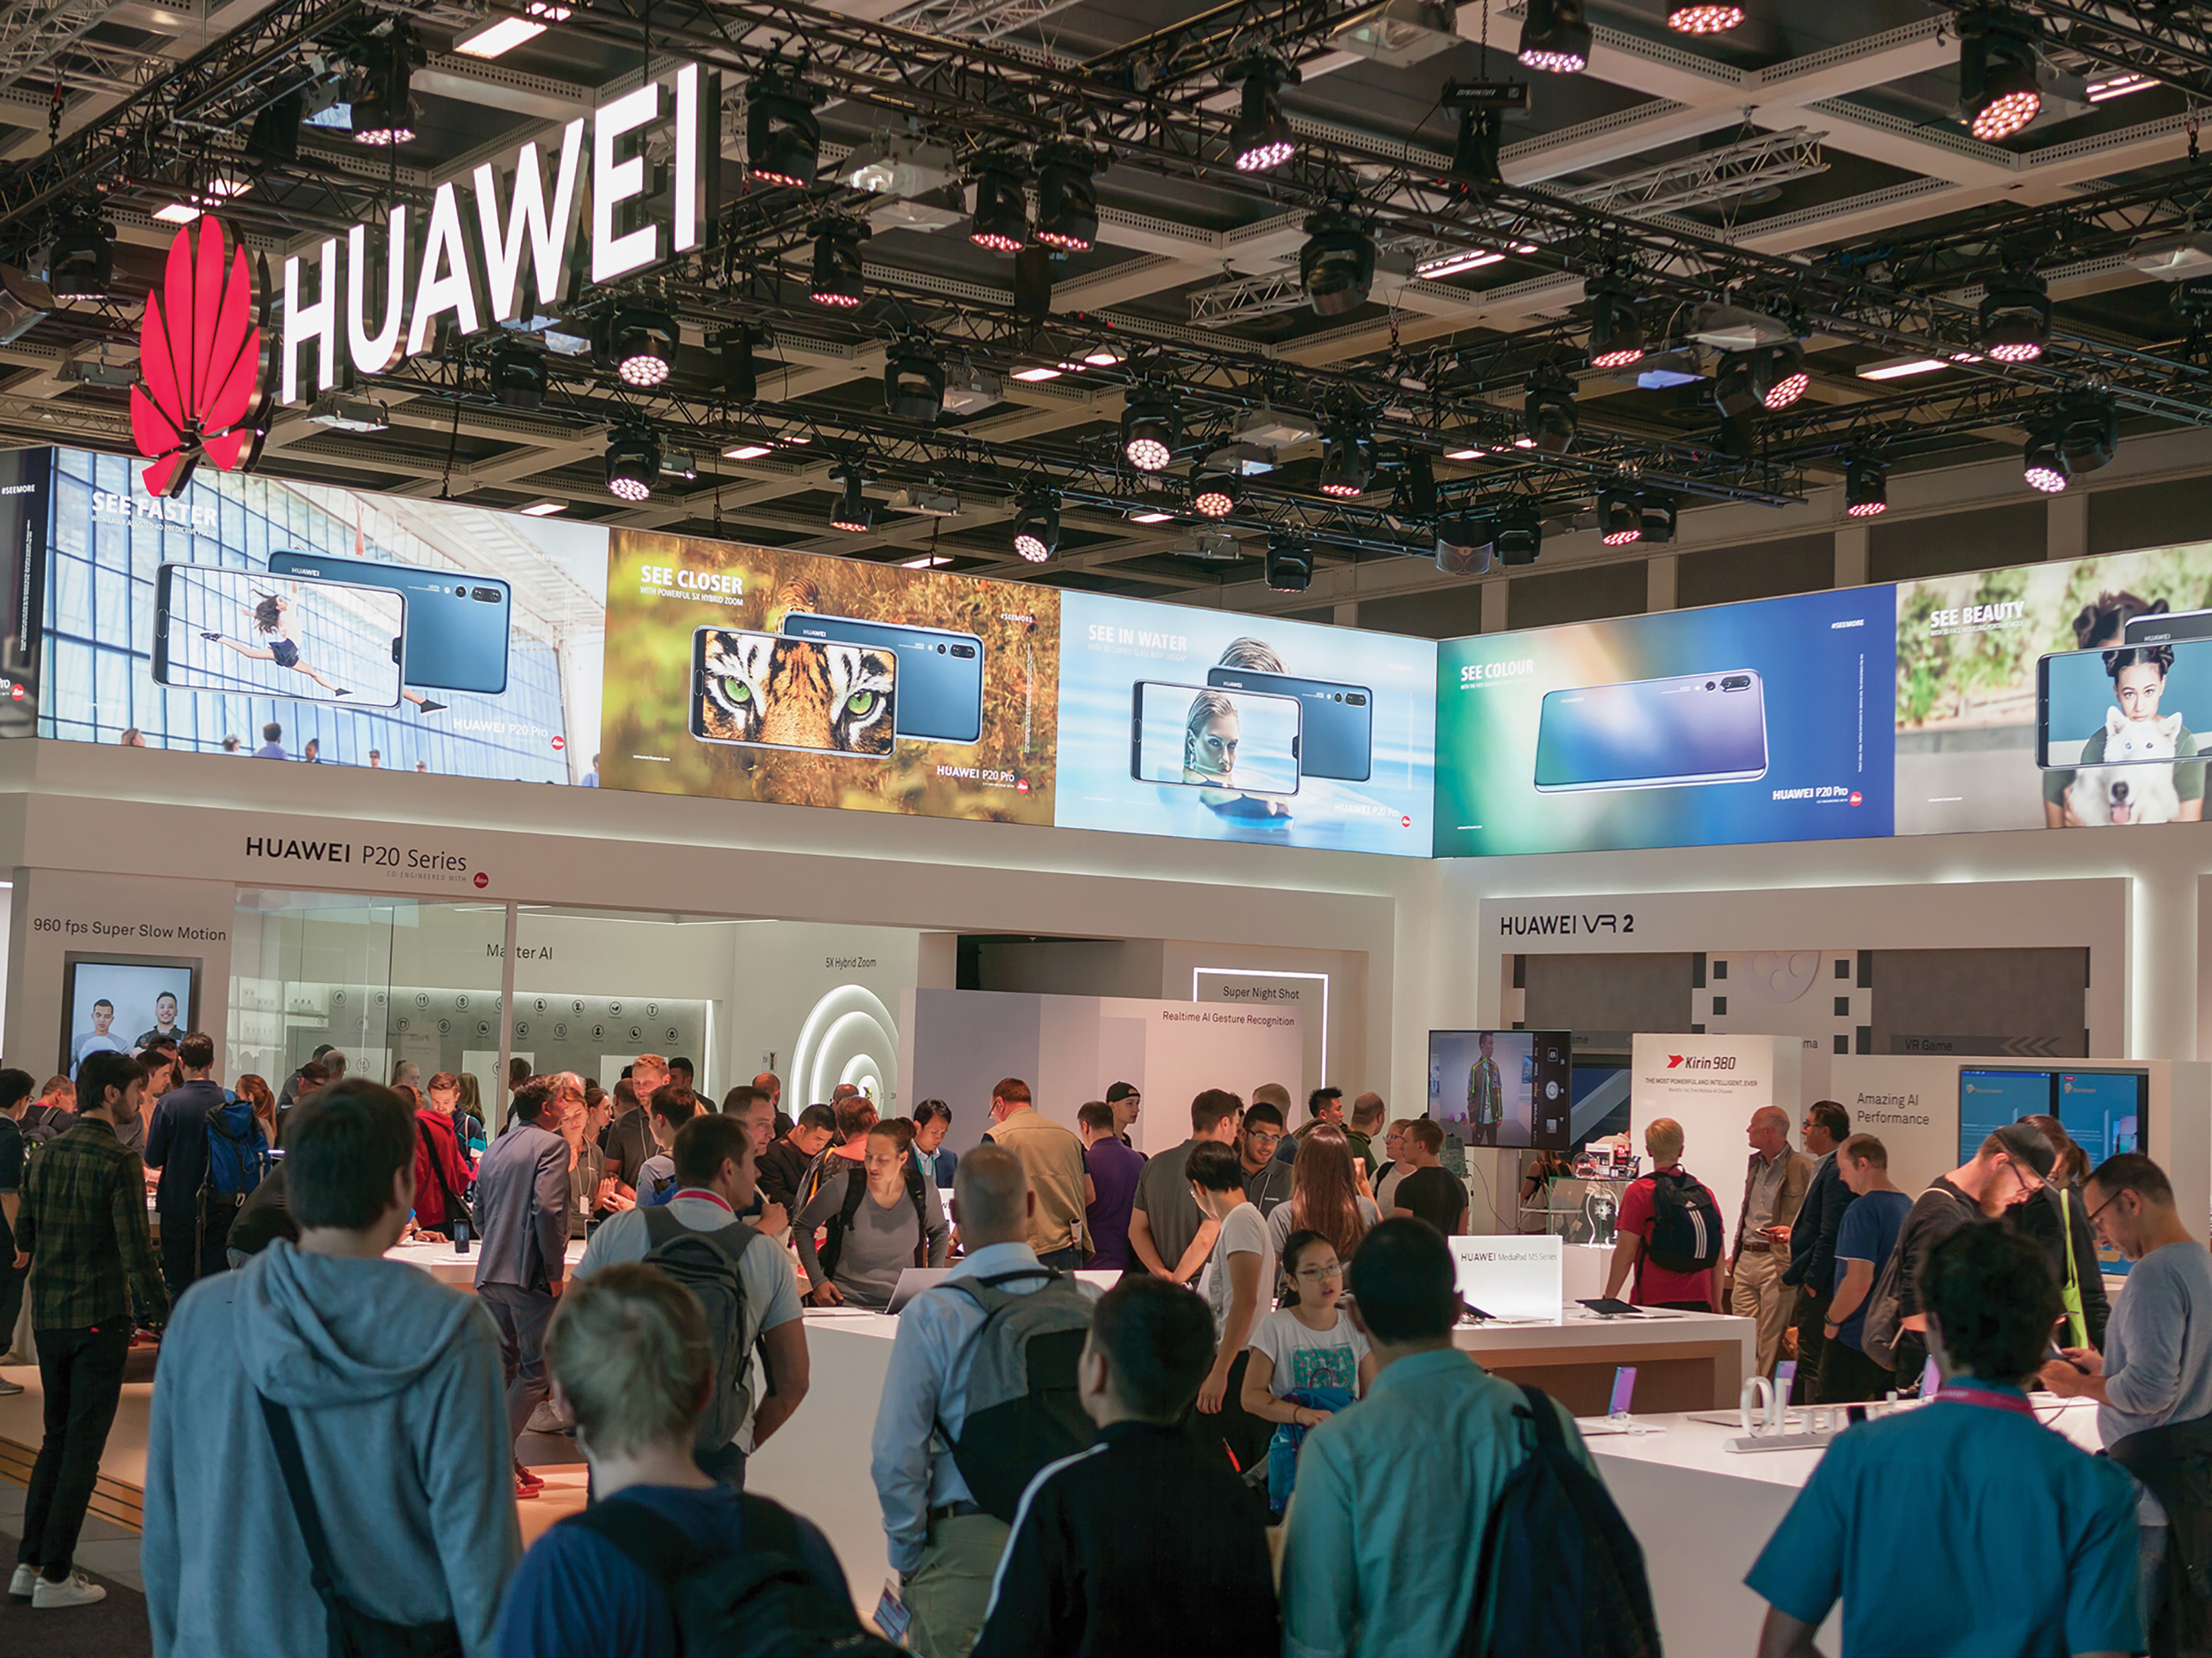 Huawei display at Internationale Funkausstellung 2018, Berlin